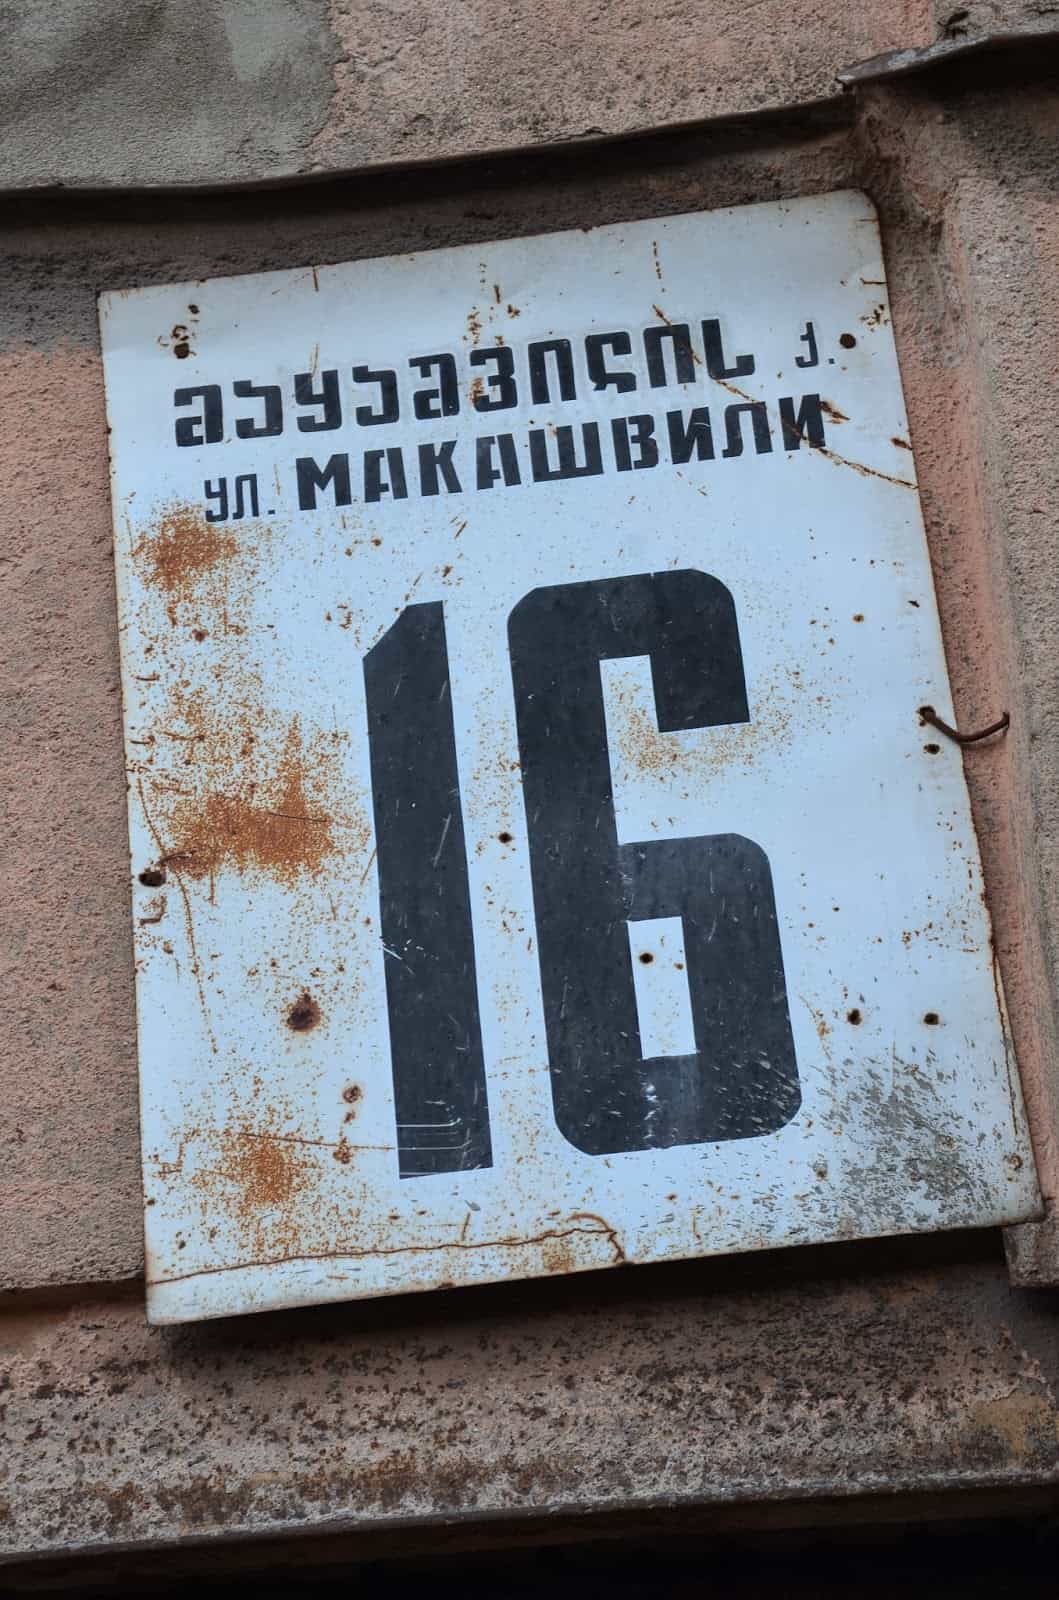 That says Makashvili in Tbilisi, Georgia